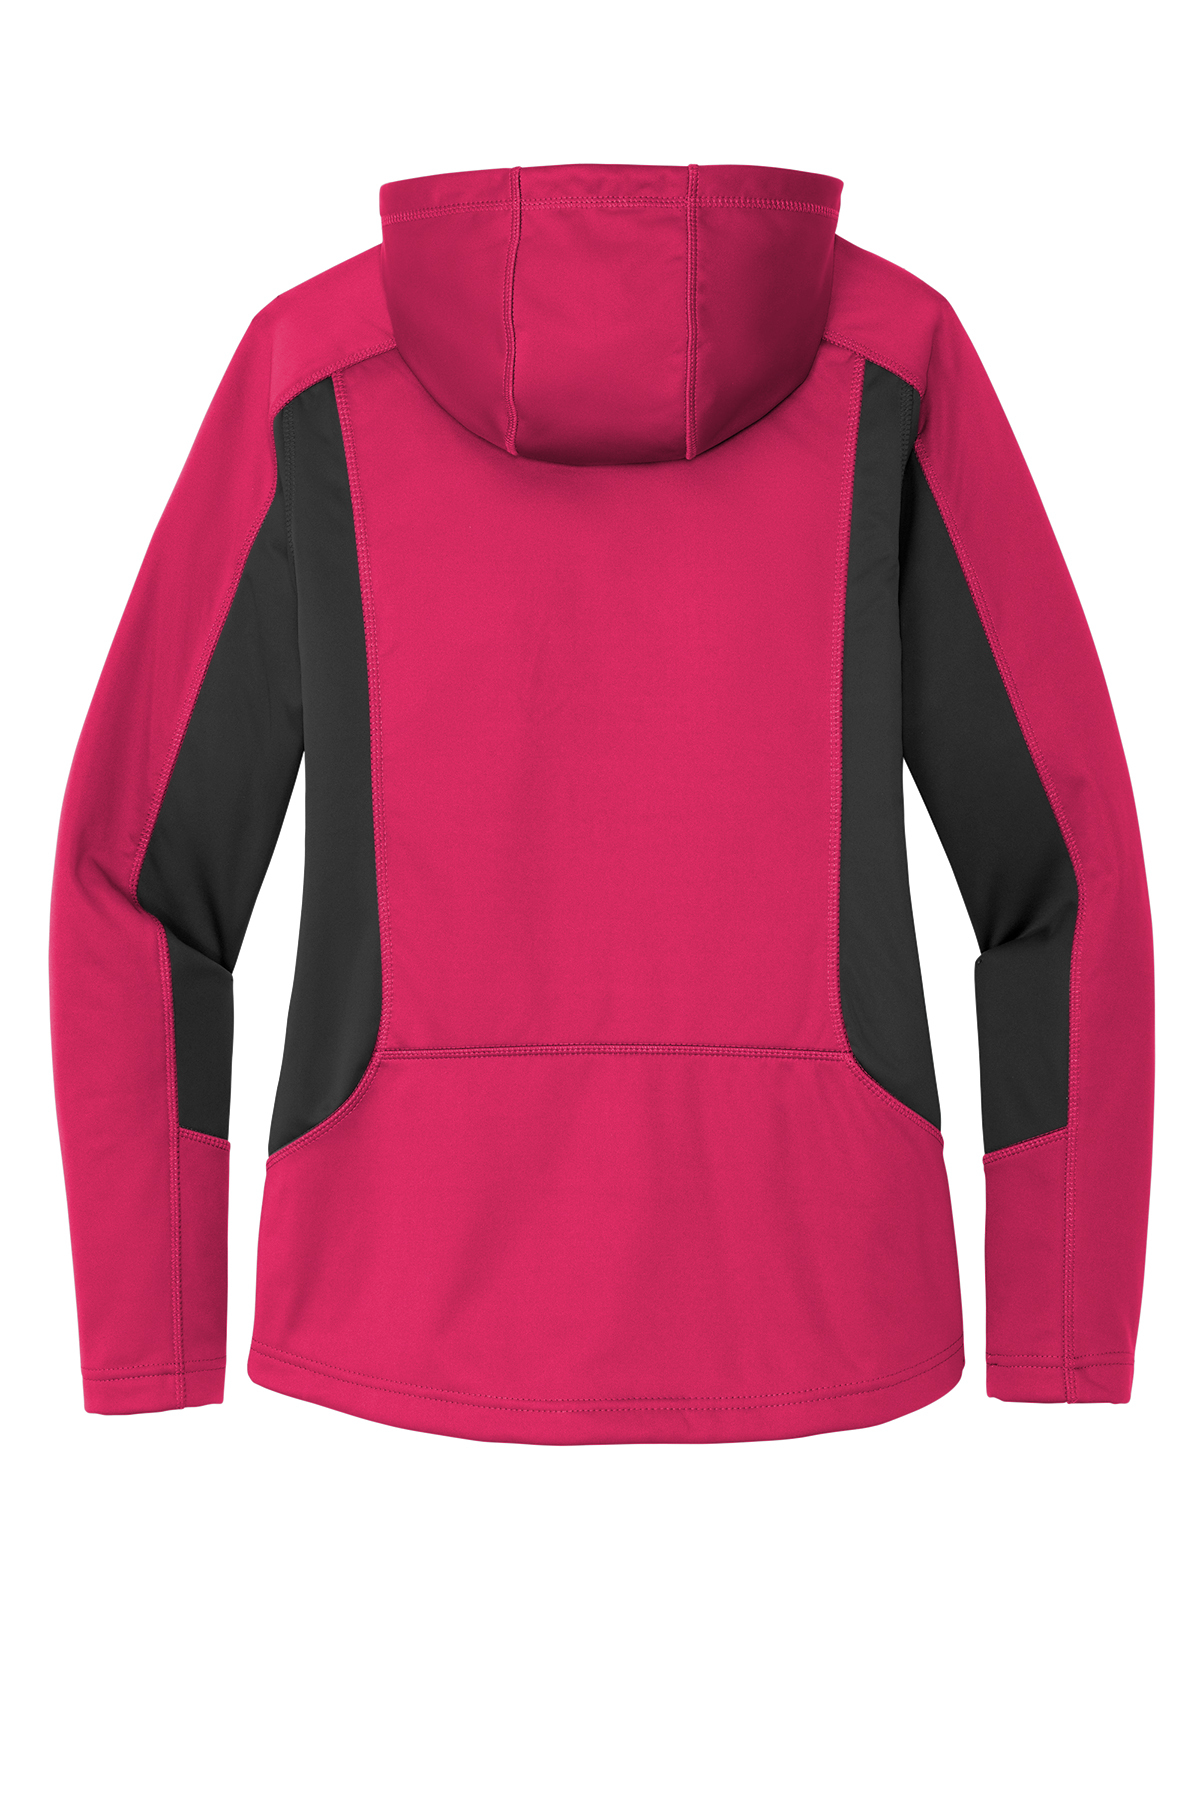 Eddie Bauer Ladies Trail Soft Shell Jacket | Product | SanMar